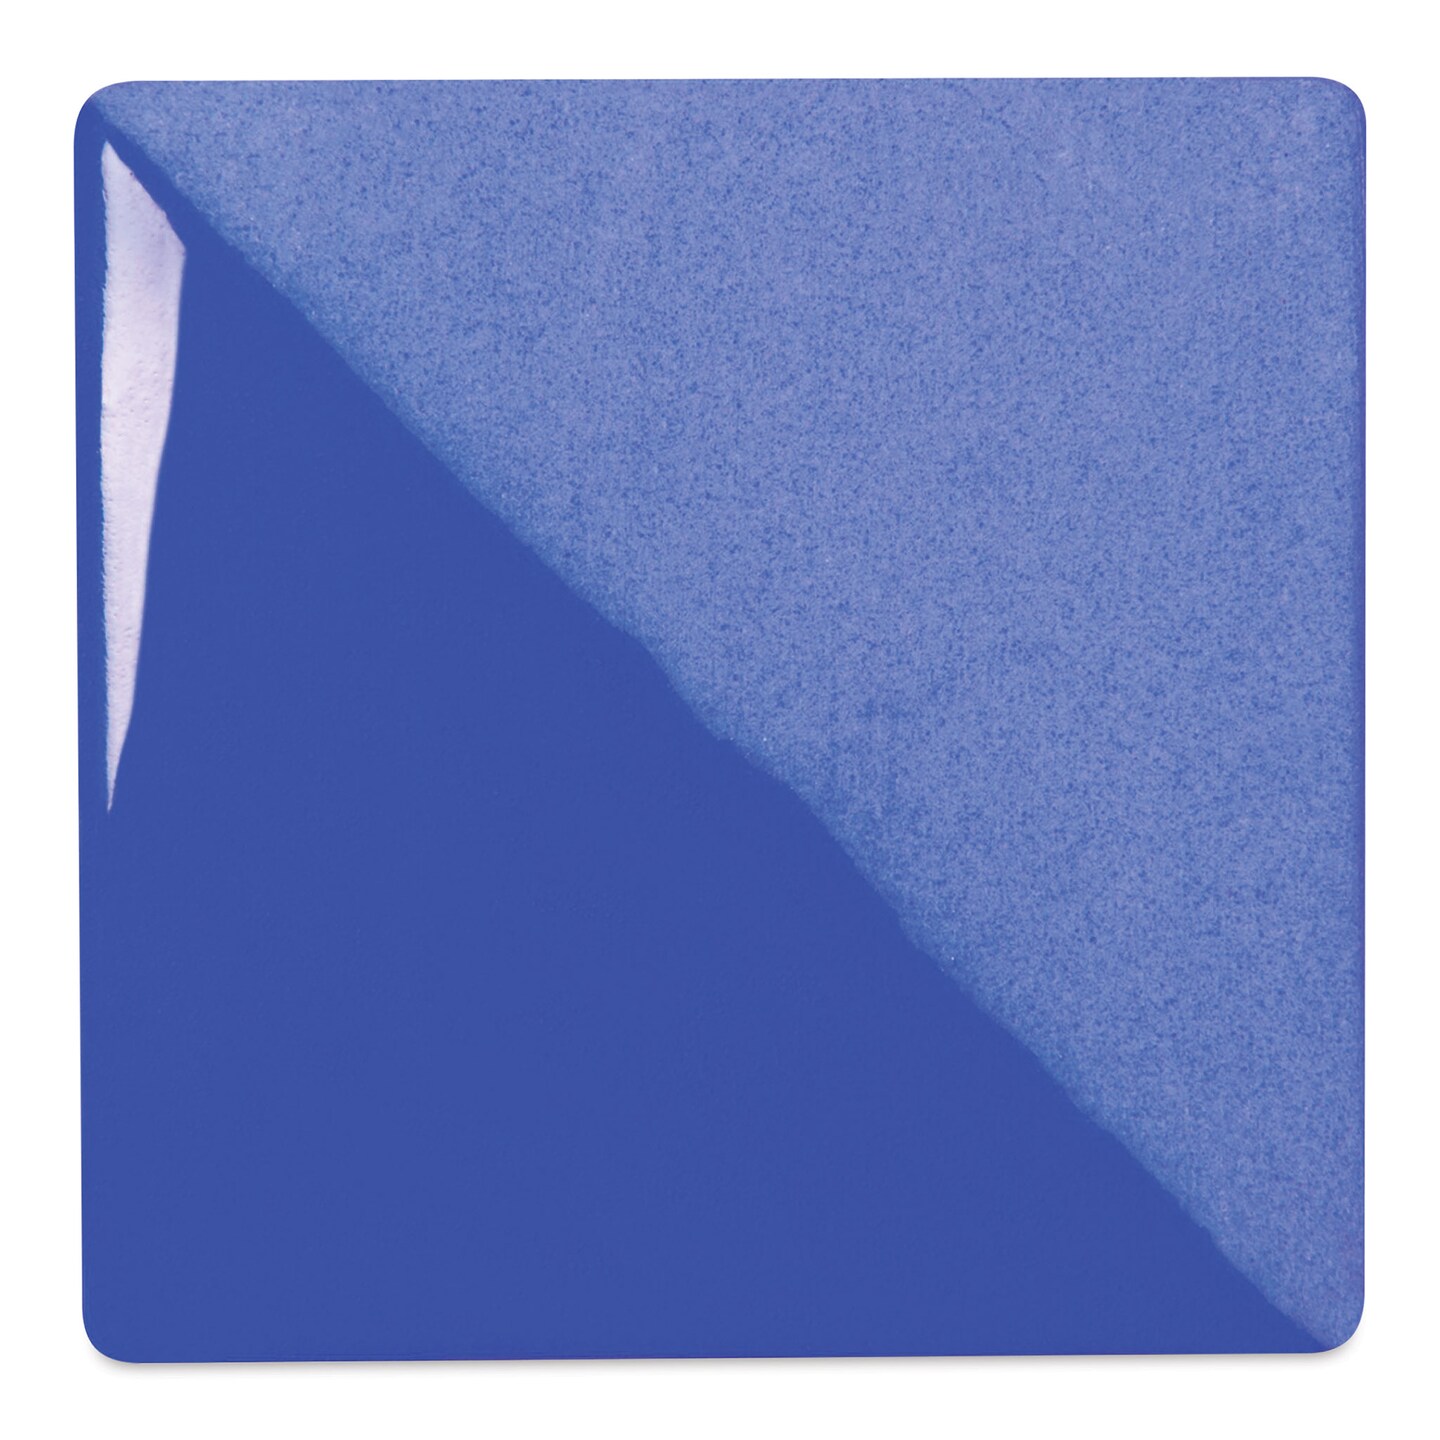 Speedball Ceramic Underglaze - Medium Blue, Opaque, 16 oz